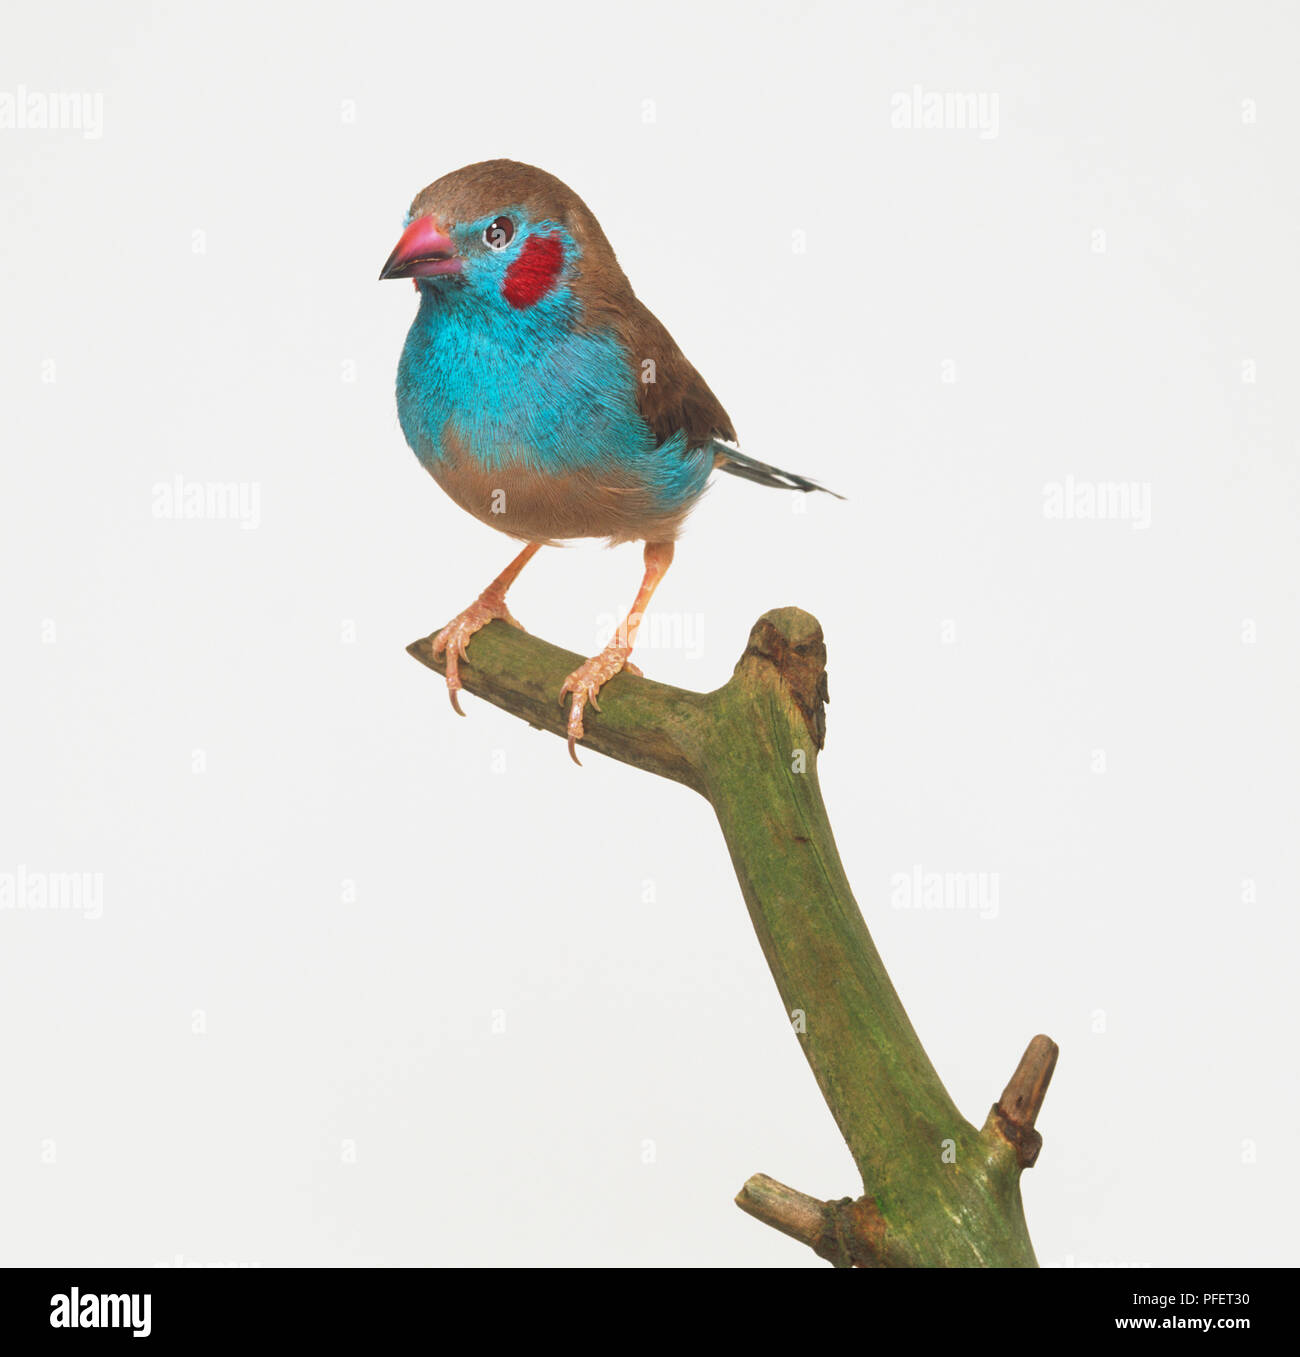 Red-cheeked Cordon Bleu Finch (Uraeginthus bengalus) on a branch Stock Photo